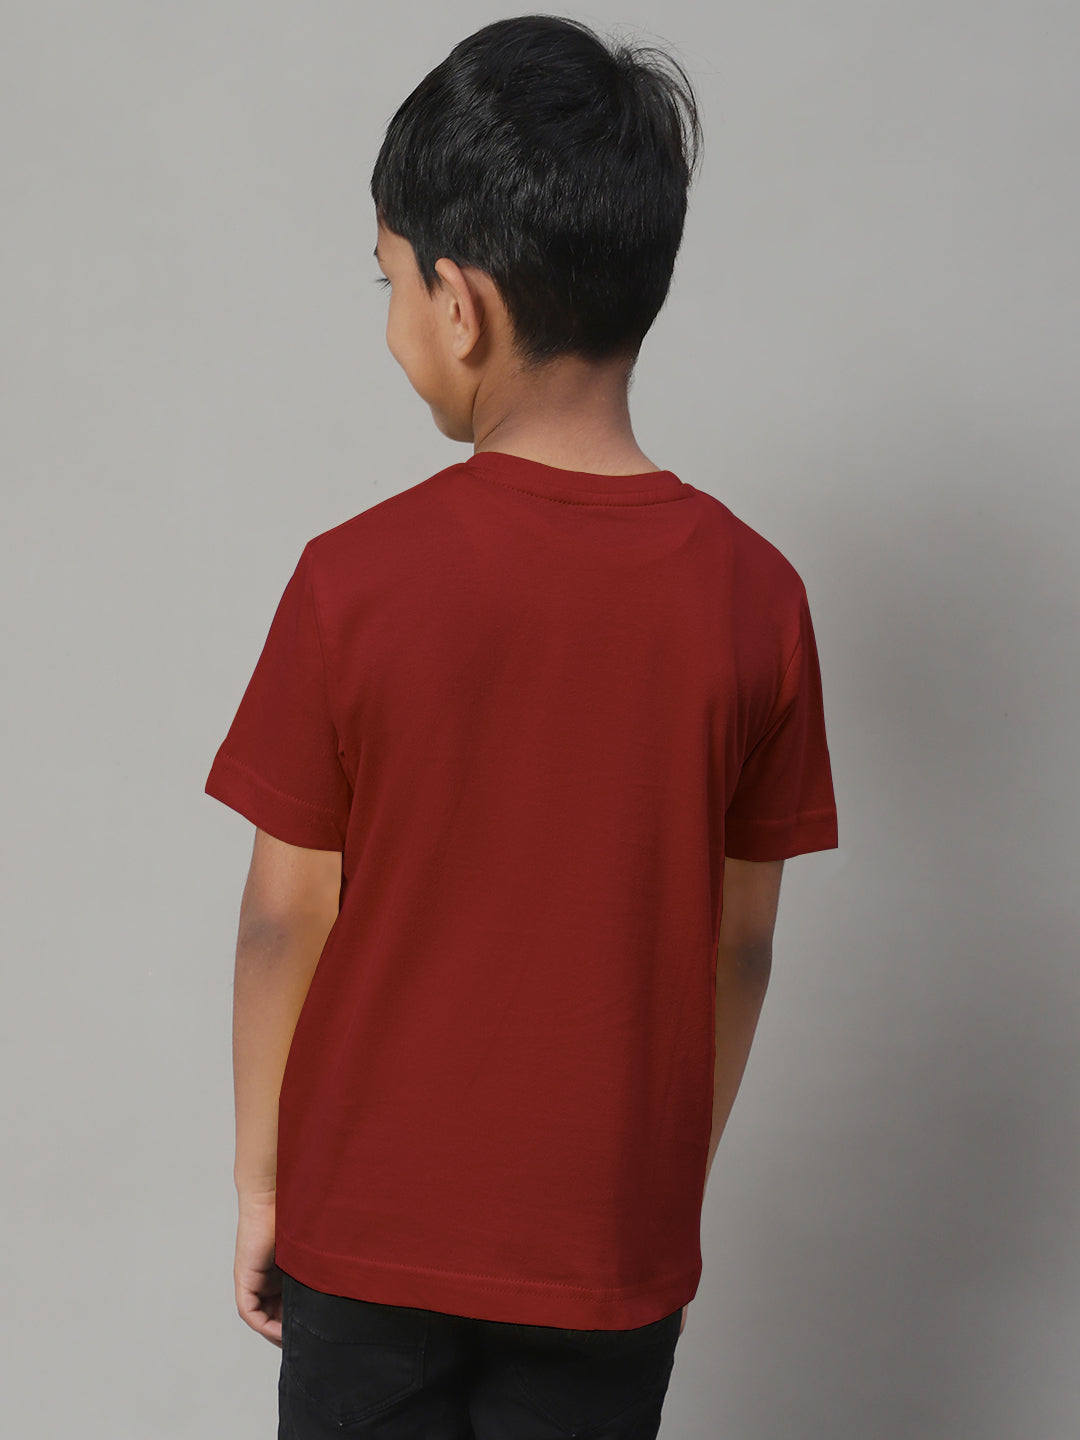 Boys V Neck Solid Pure Cotton 2-7Y T-Shirt - Friskers